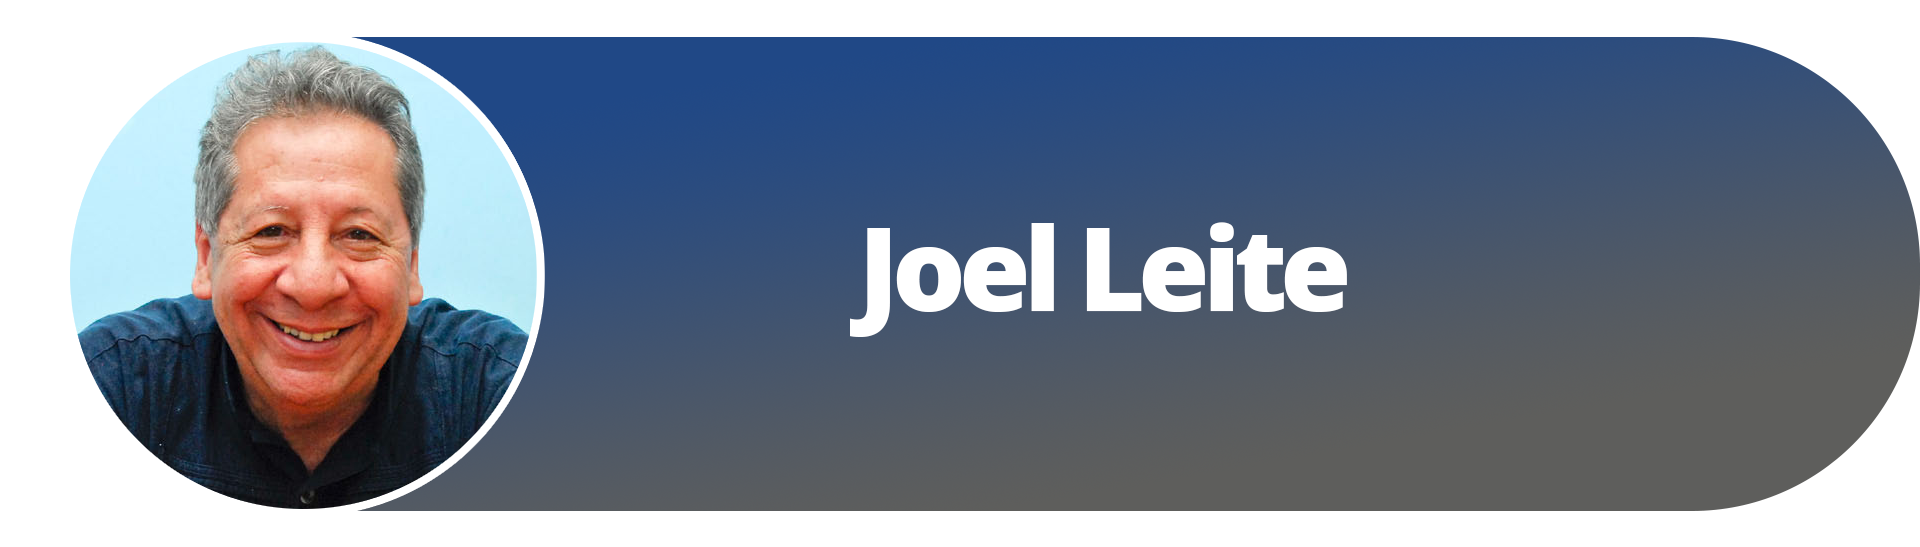 Coluna Joel Leite